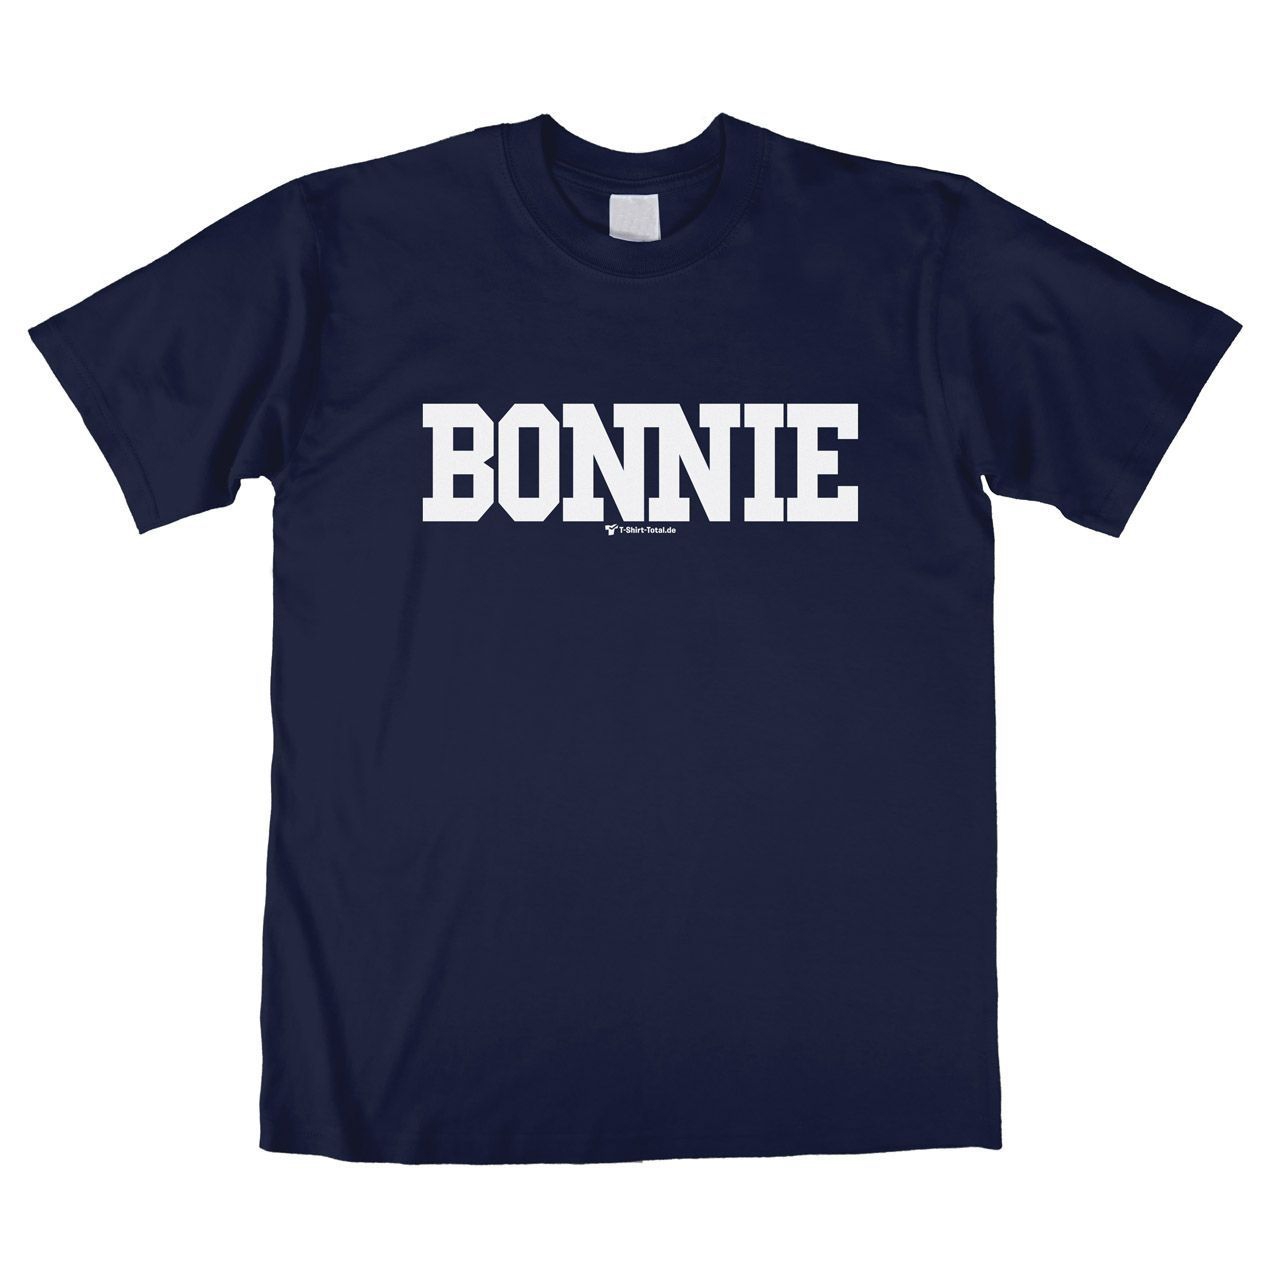 Bonnie Unisex T-Shirt navy Small